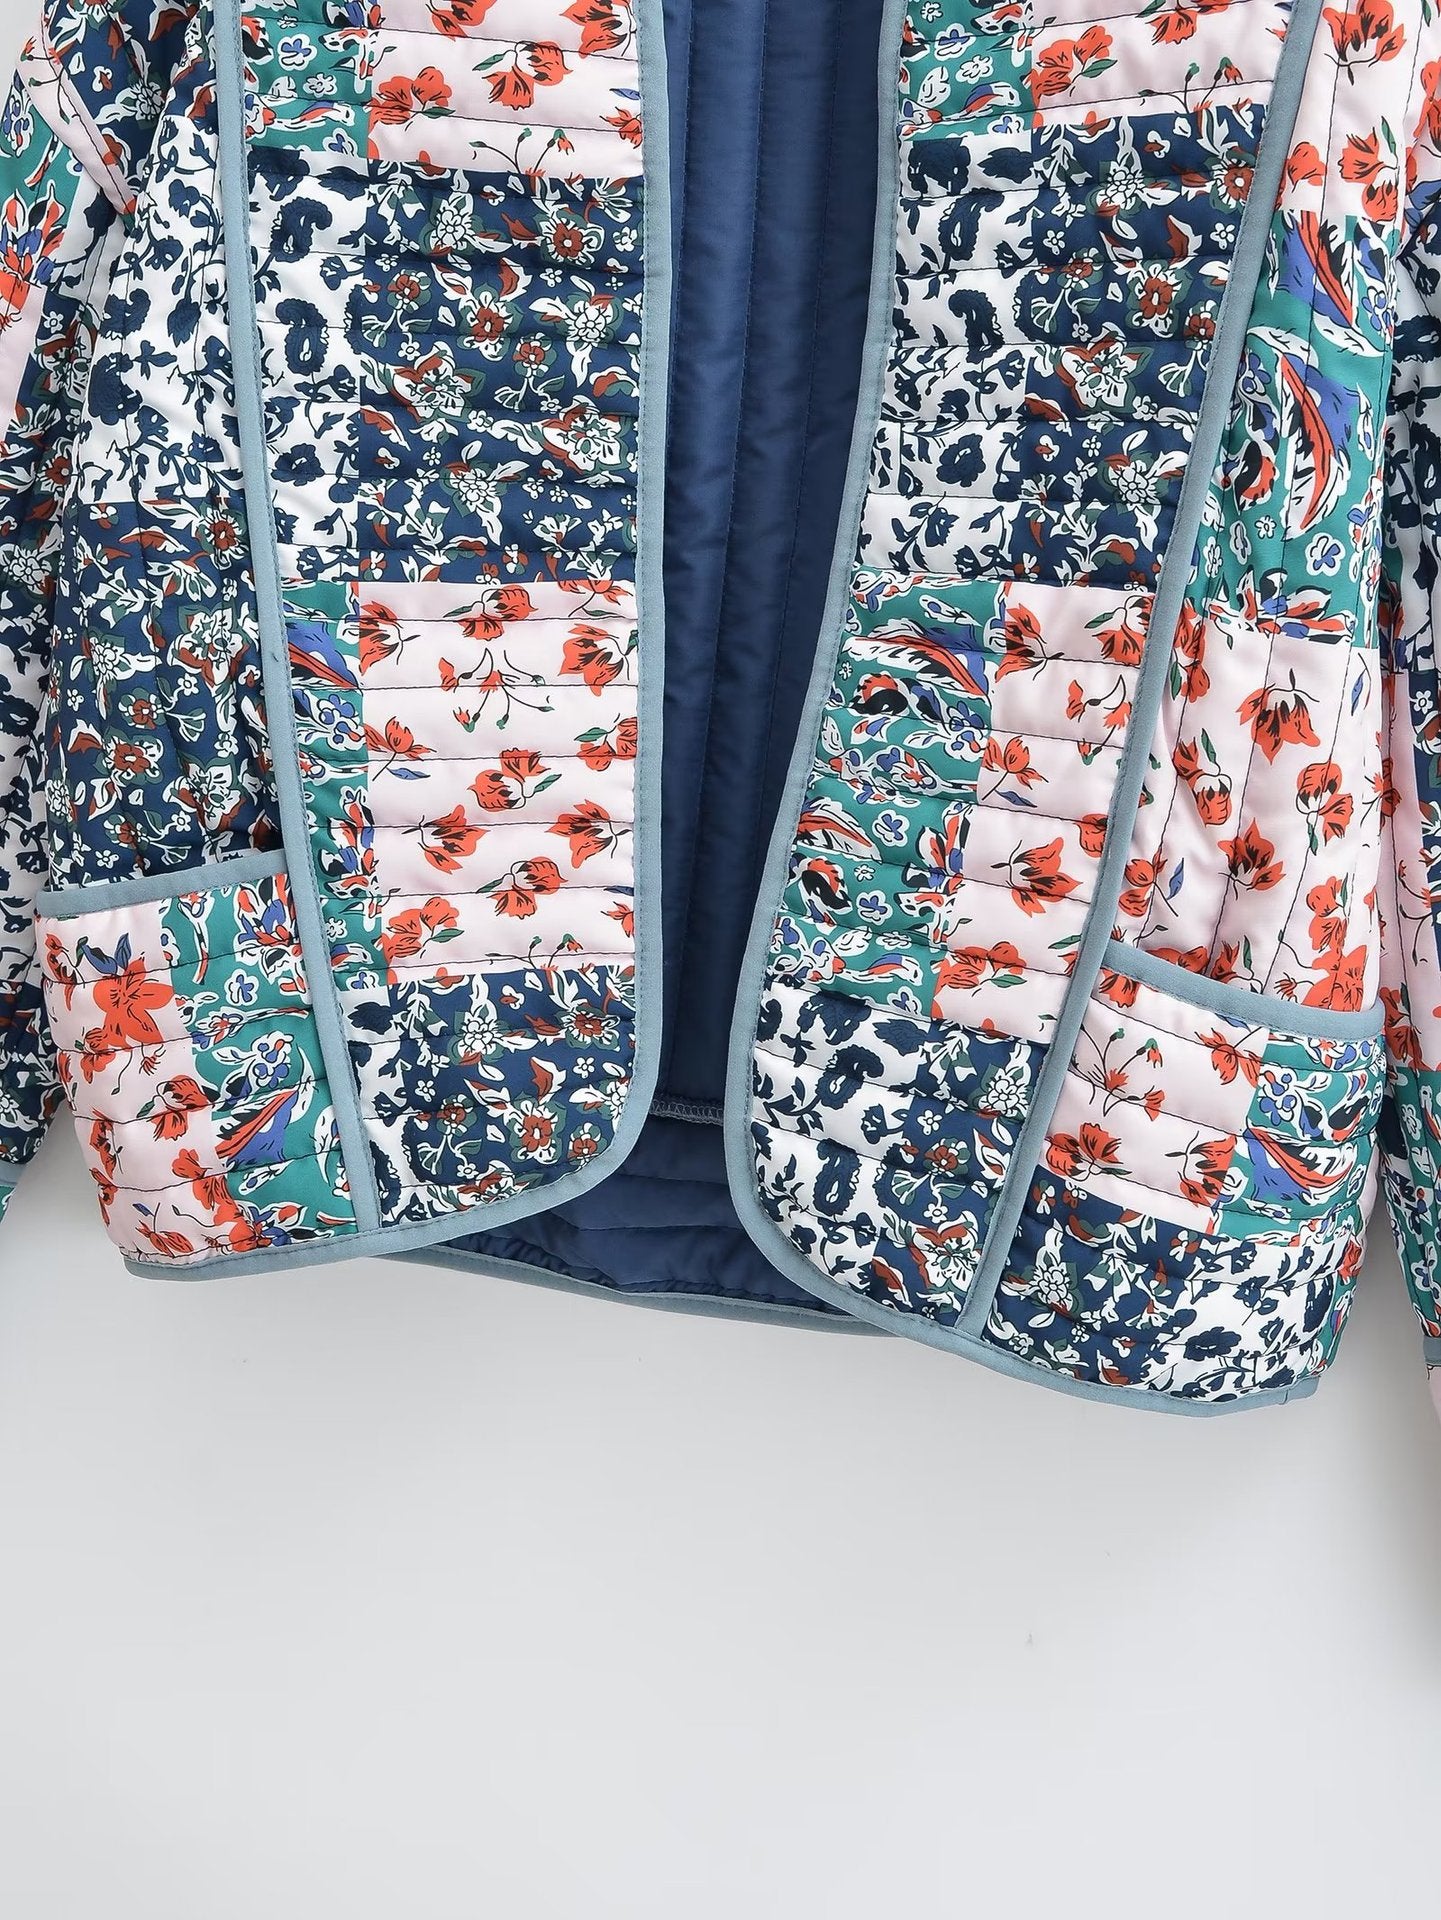 Designed Fashion Floral Print Cotton Overcoat